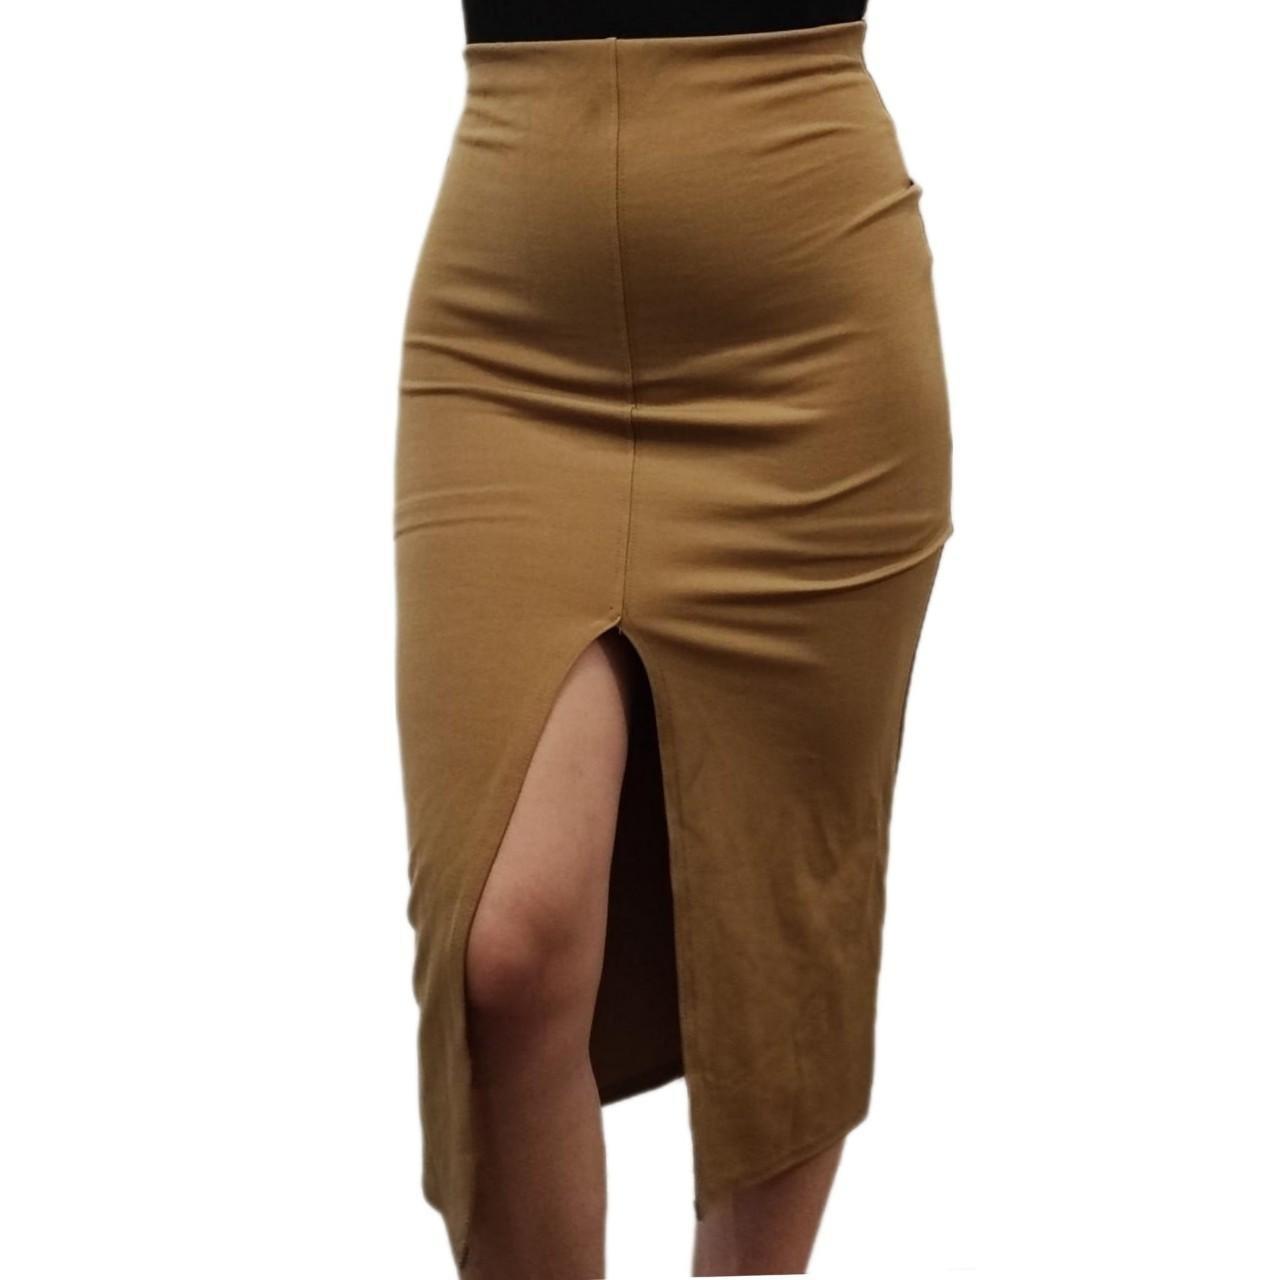 PrettyLittleThing Women's Tan Skirt | Depop